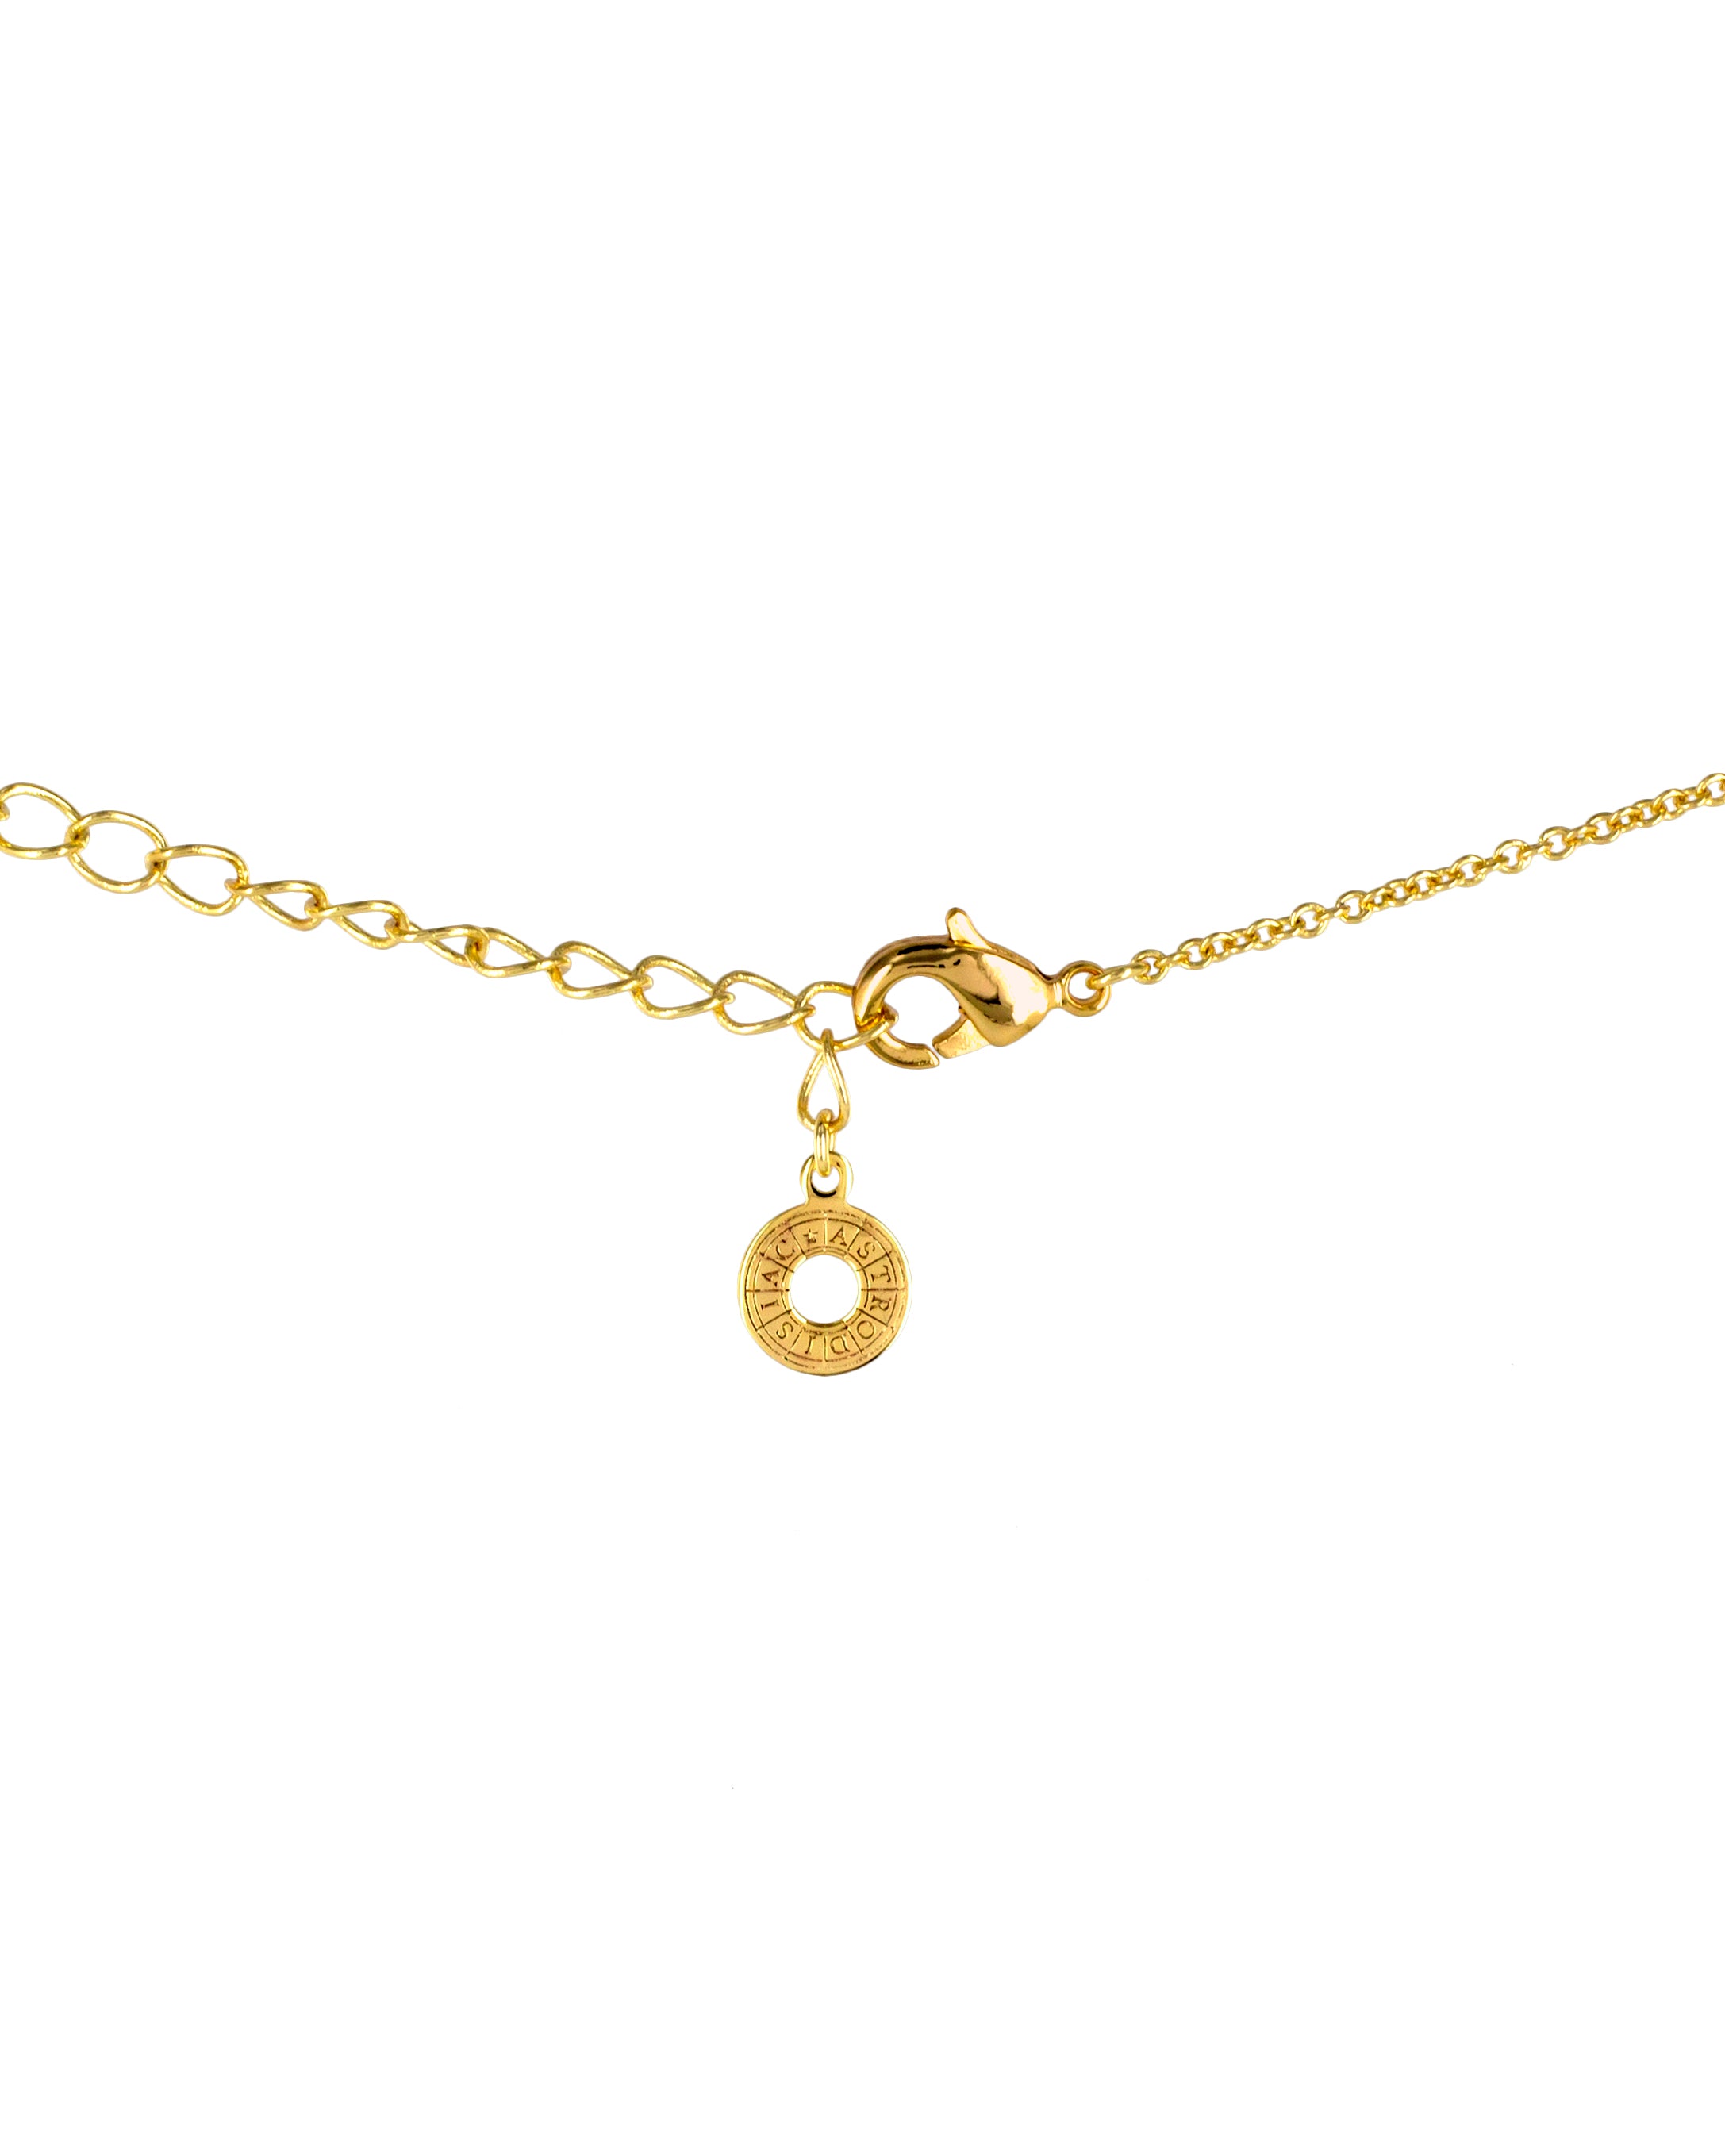 astrologie collier verseau- astrodisiac - bijoux - paris - claire naa - jewels - necklace aquarius - astrology